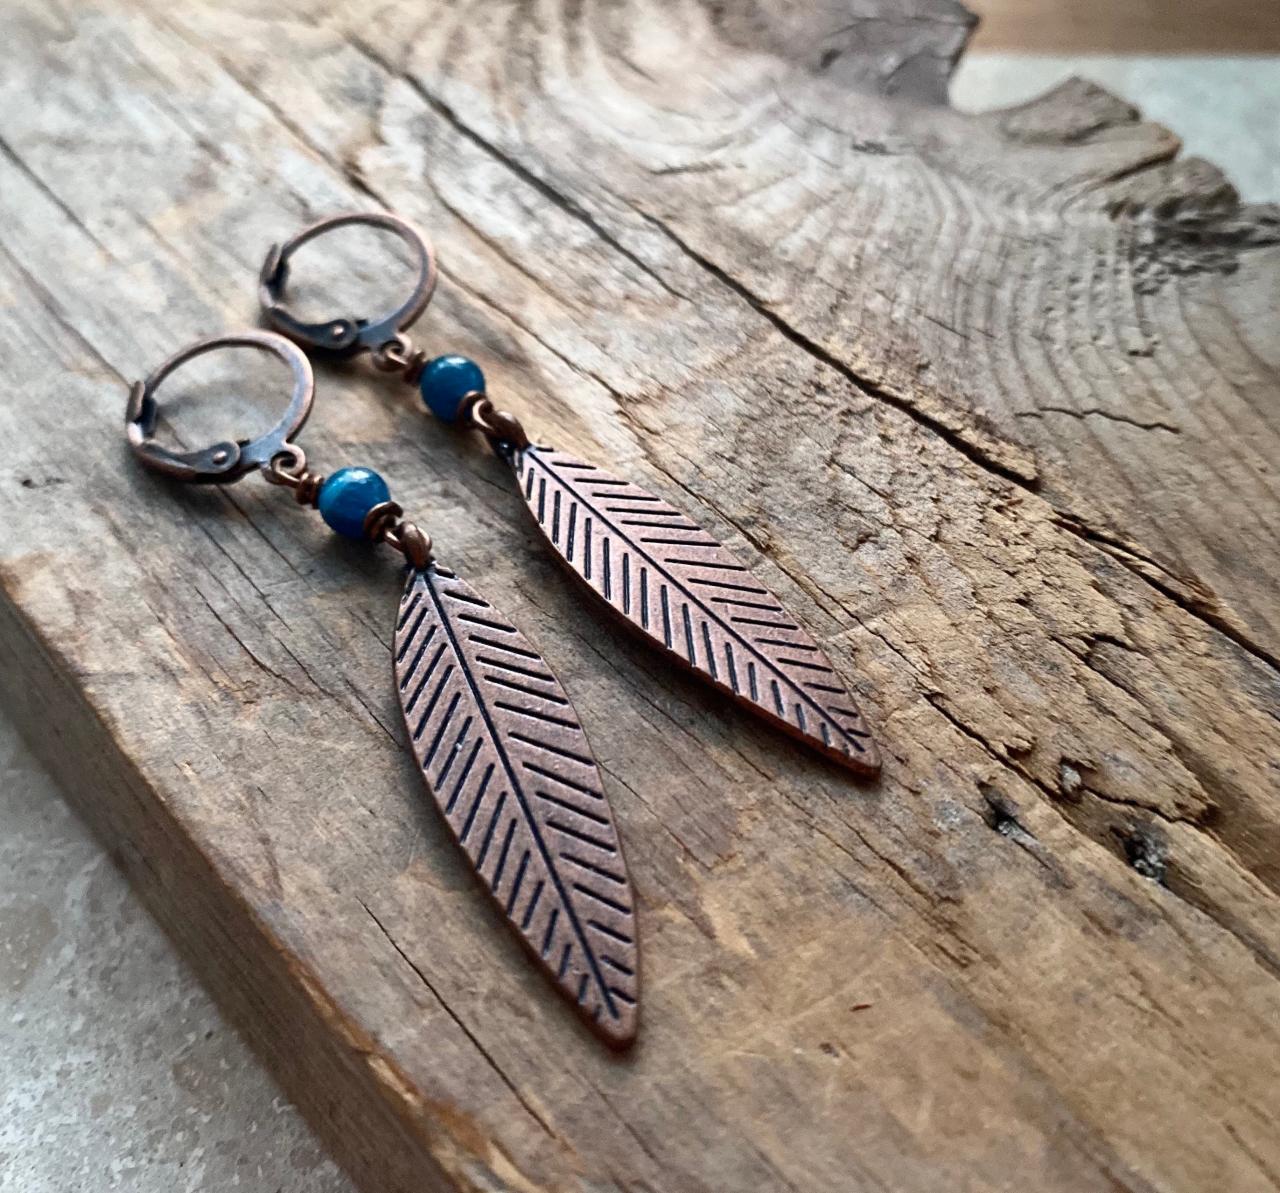 Feather Earrings - Antiqued Copper With Blue Stone. Leverbacks Long Dangles Boho Chic Jewelry, Bohemian Hippie Statement Earrings Coachella.